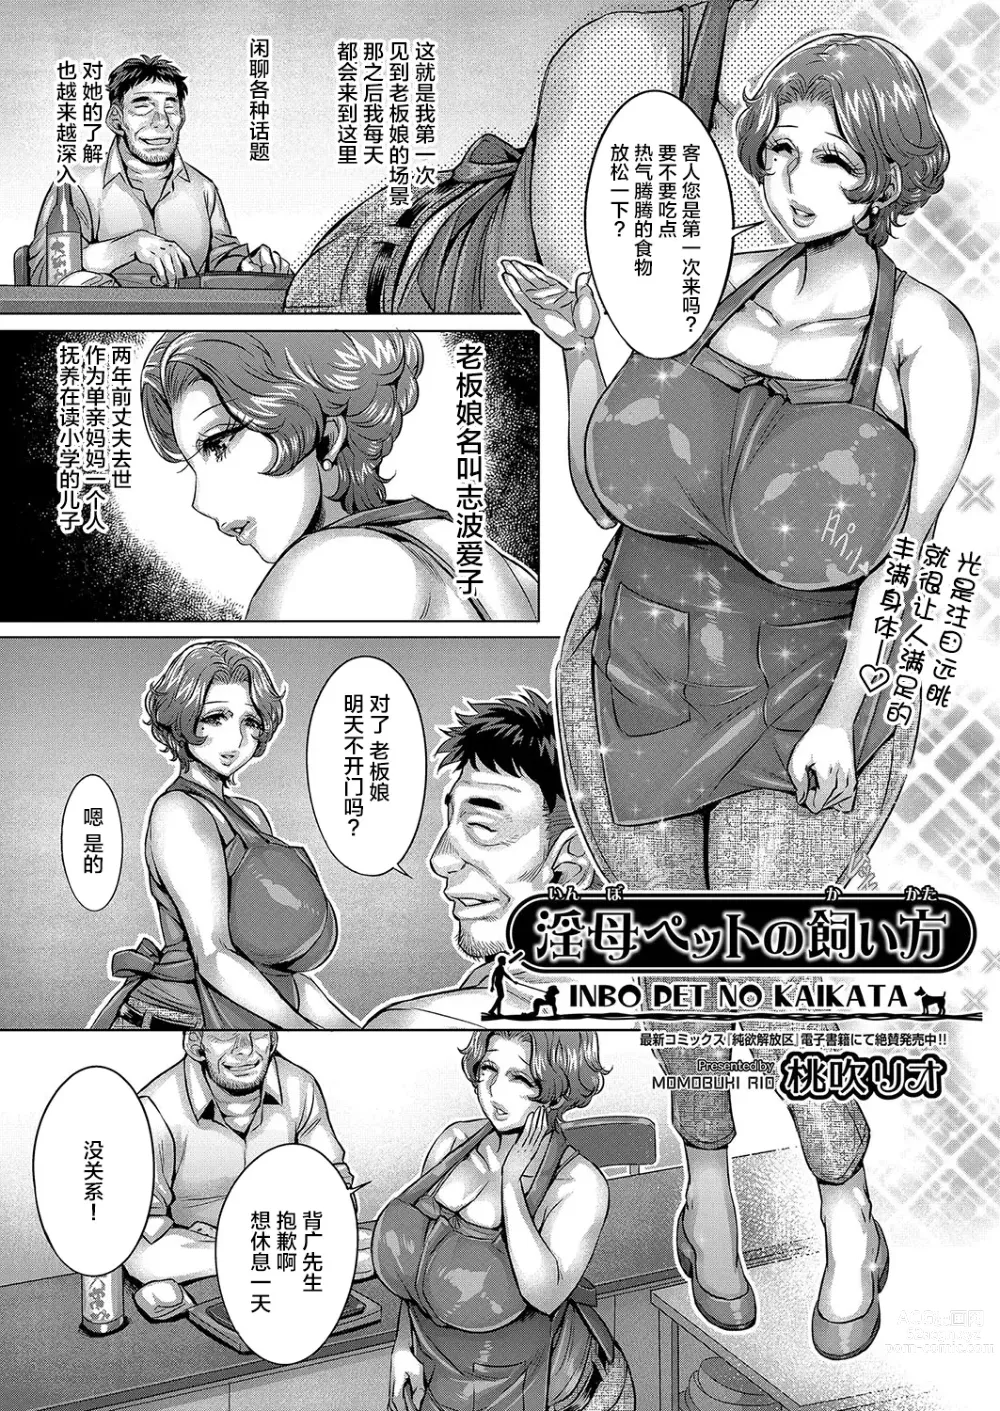 Page 2 of manga Inbo Pet No Kaikata